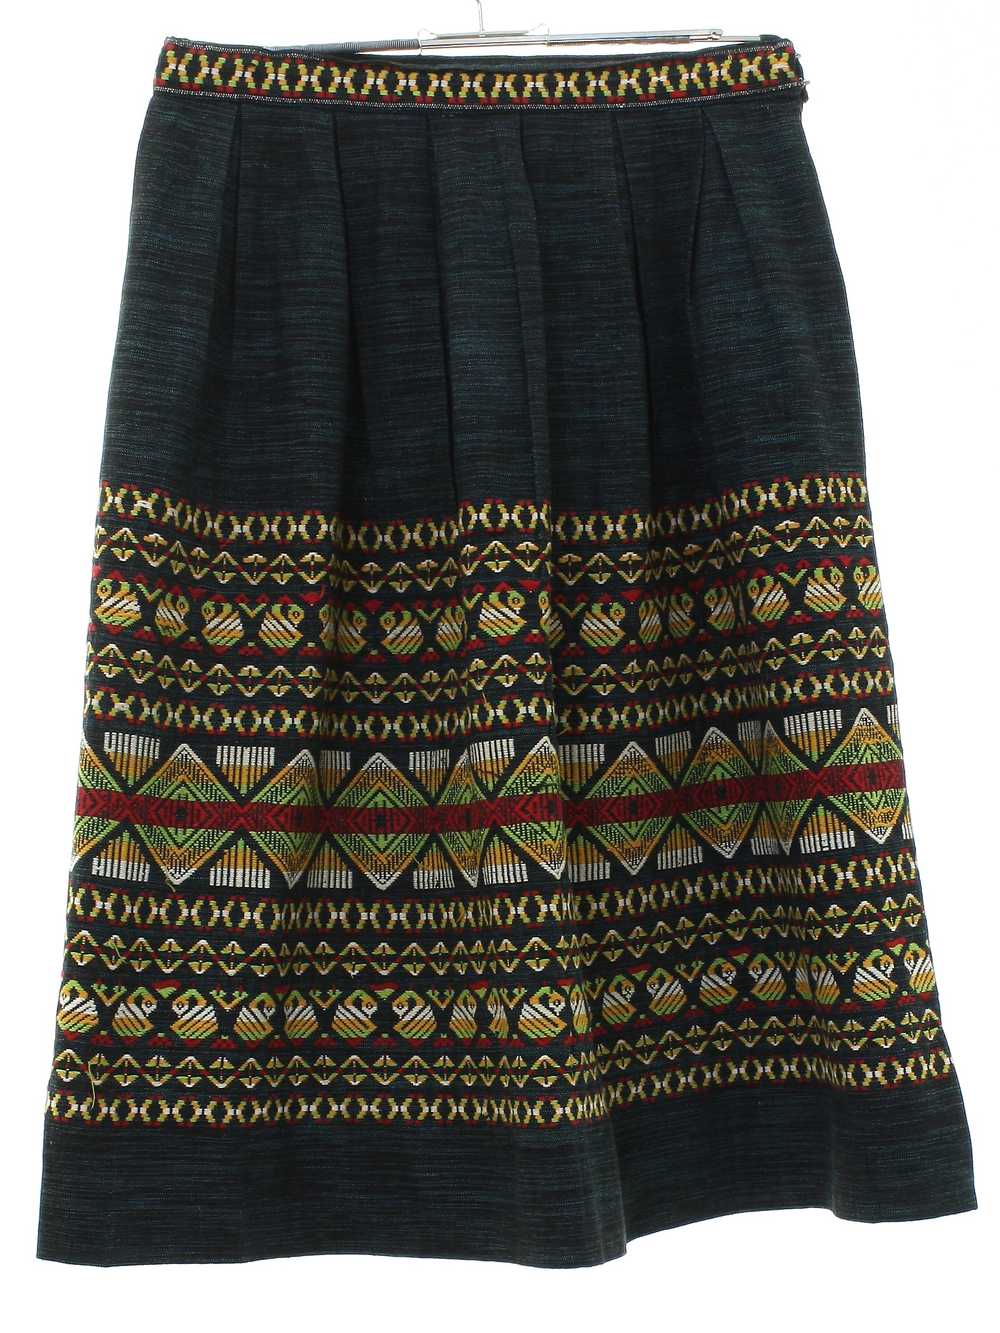 1970's Guatemalan Style Skirt - image 1